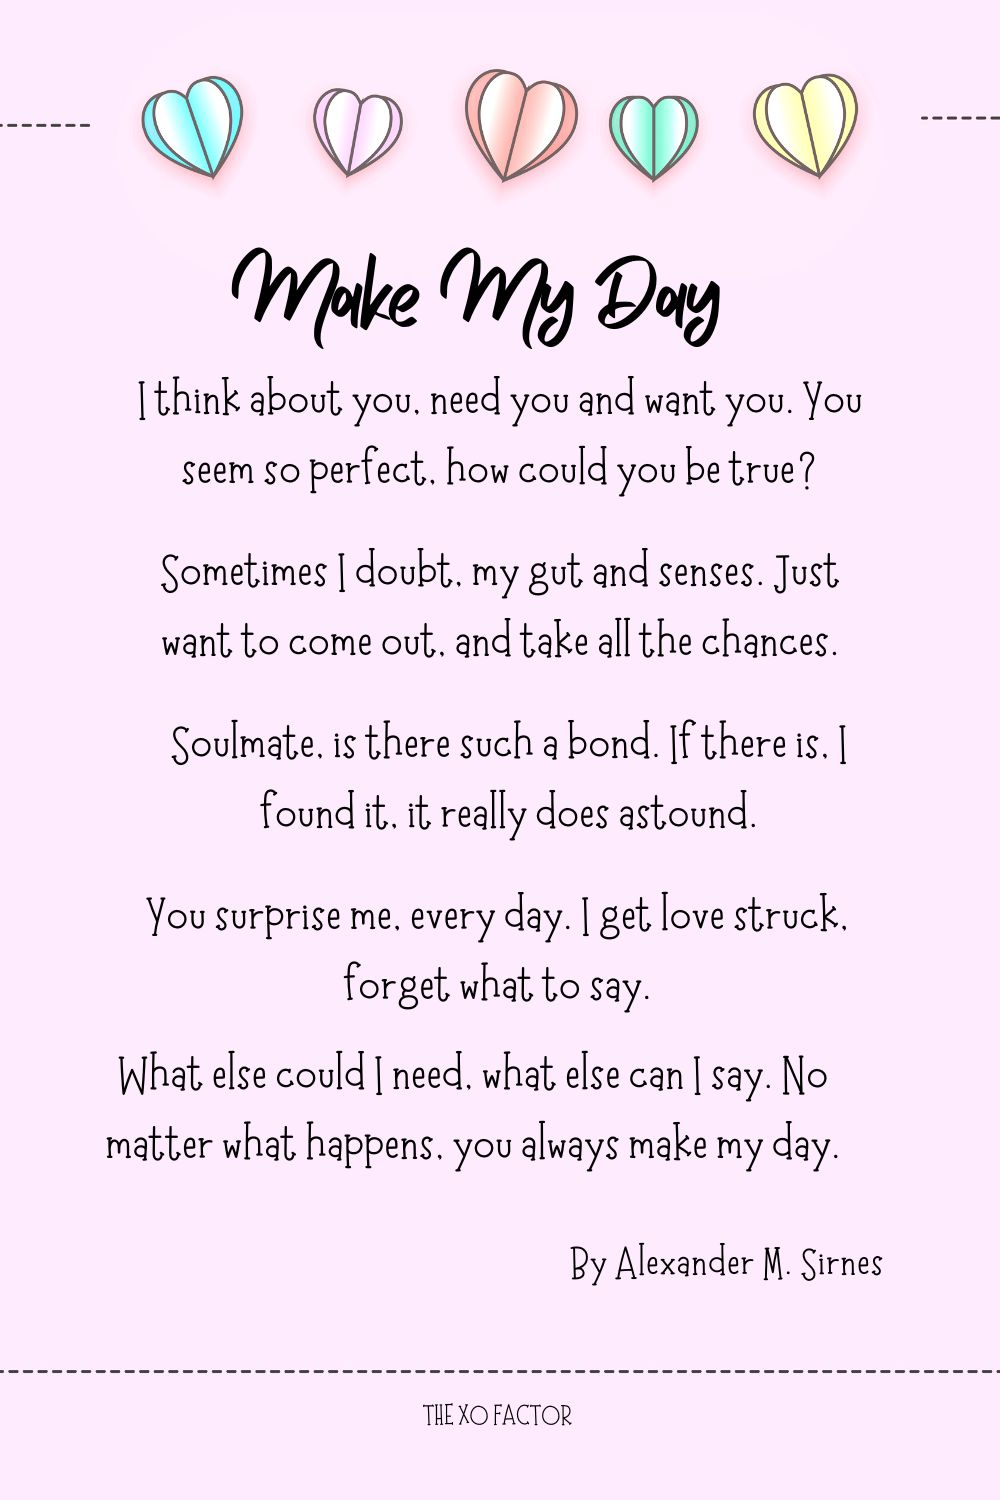 Make My Day (Love Poem) Poem by Alexander M. Sirnes